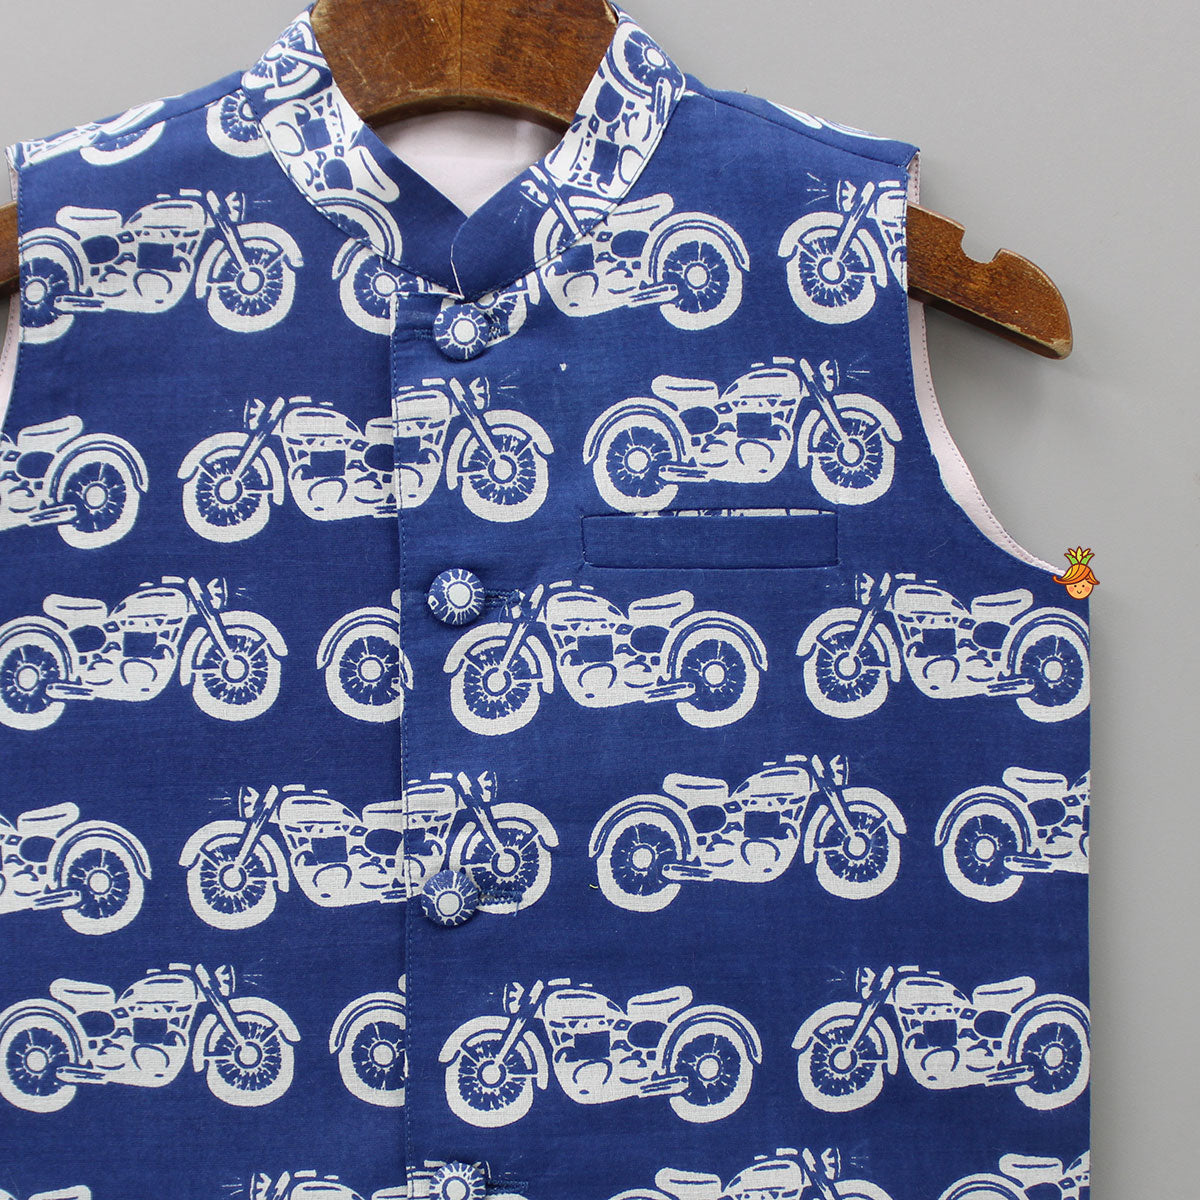 Bike Printed Blue Jacket